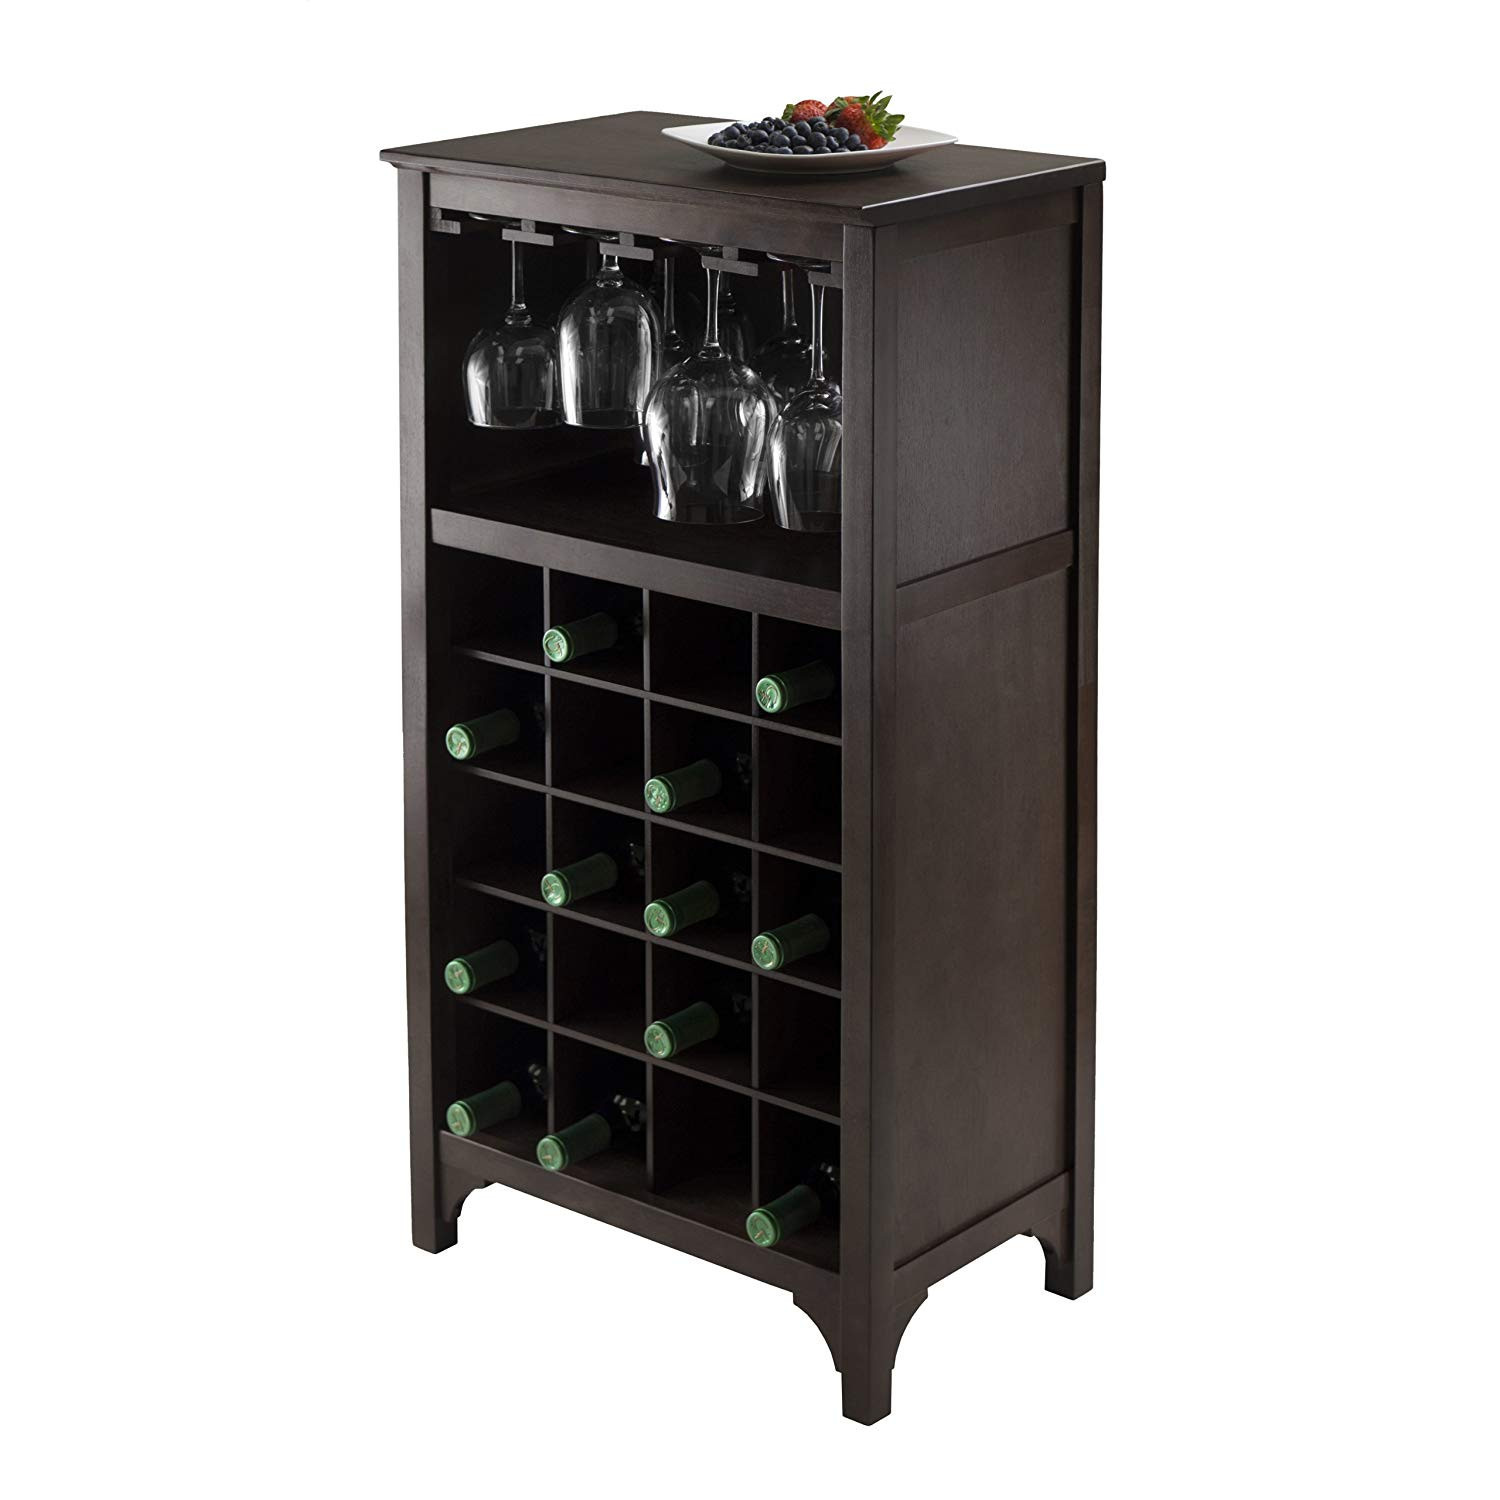 Best ideas about Wine Rack Cabinet
. Save or Pin Wine Storage Cabinet Dark Wood Bar 12 Glass 20 Bottles Now.